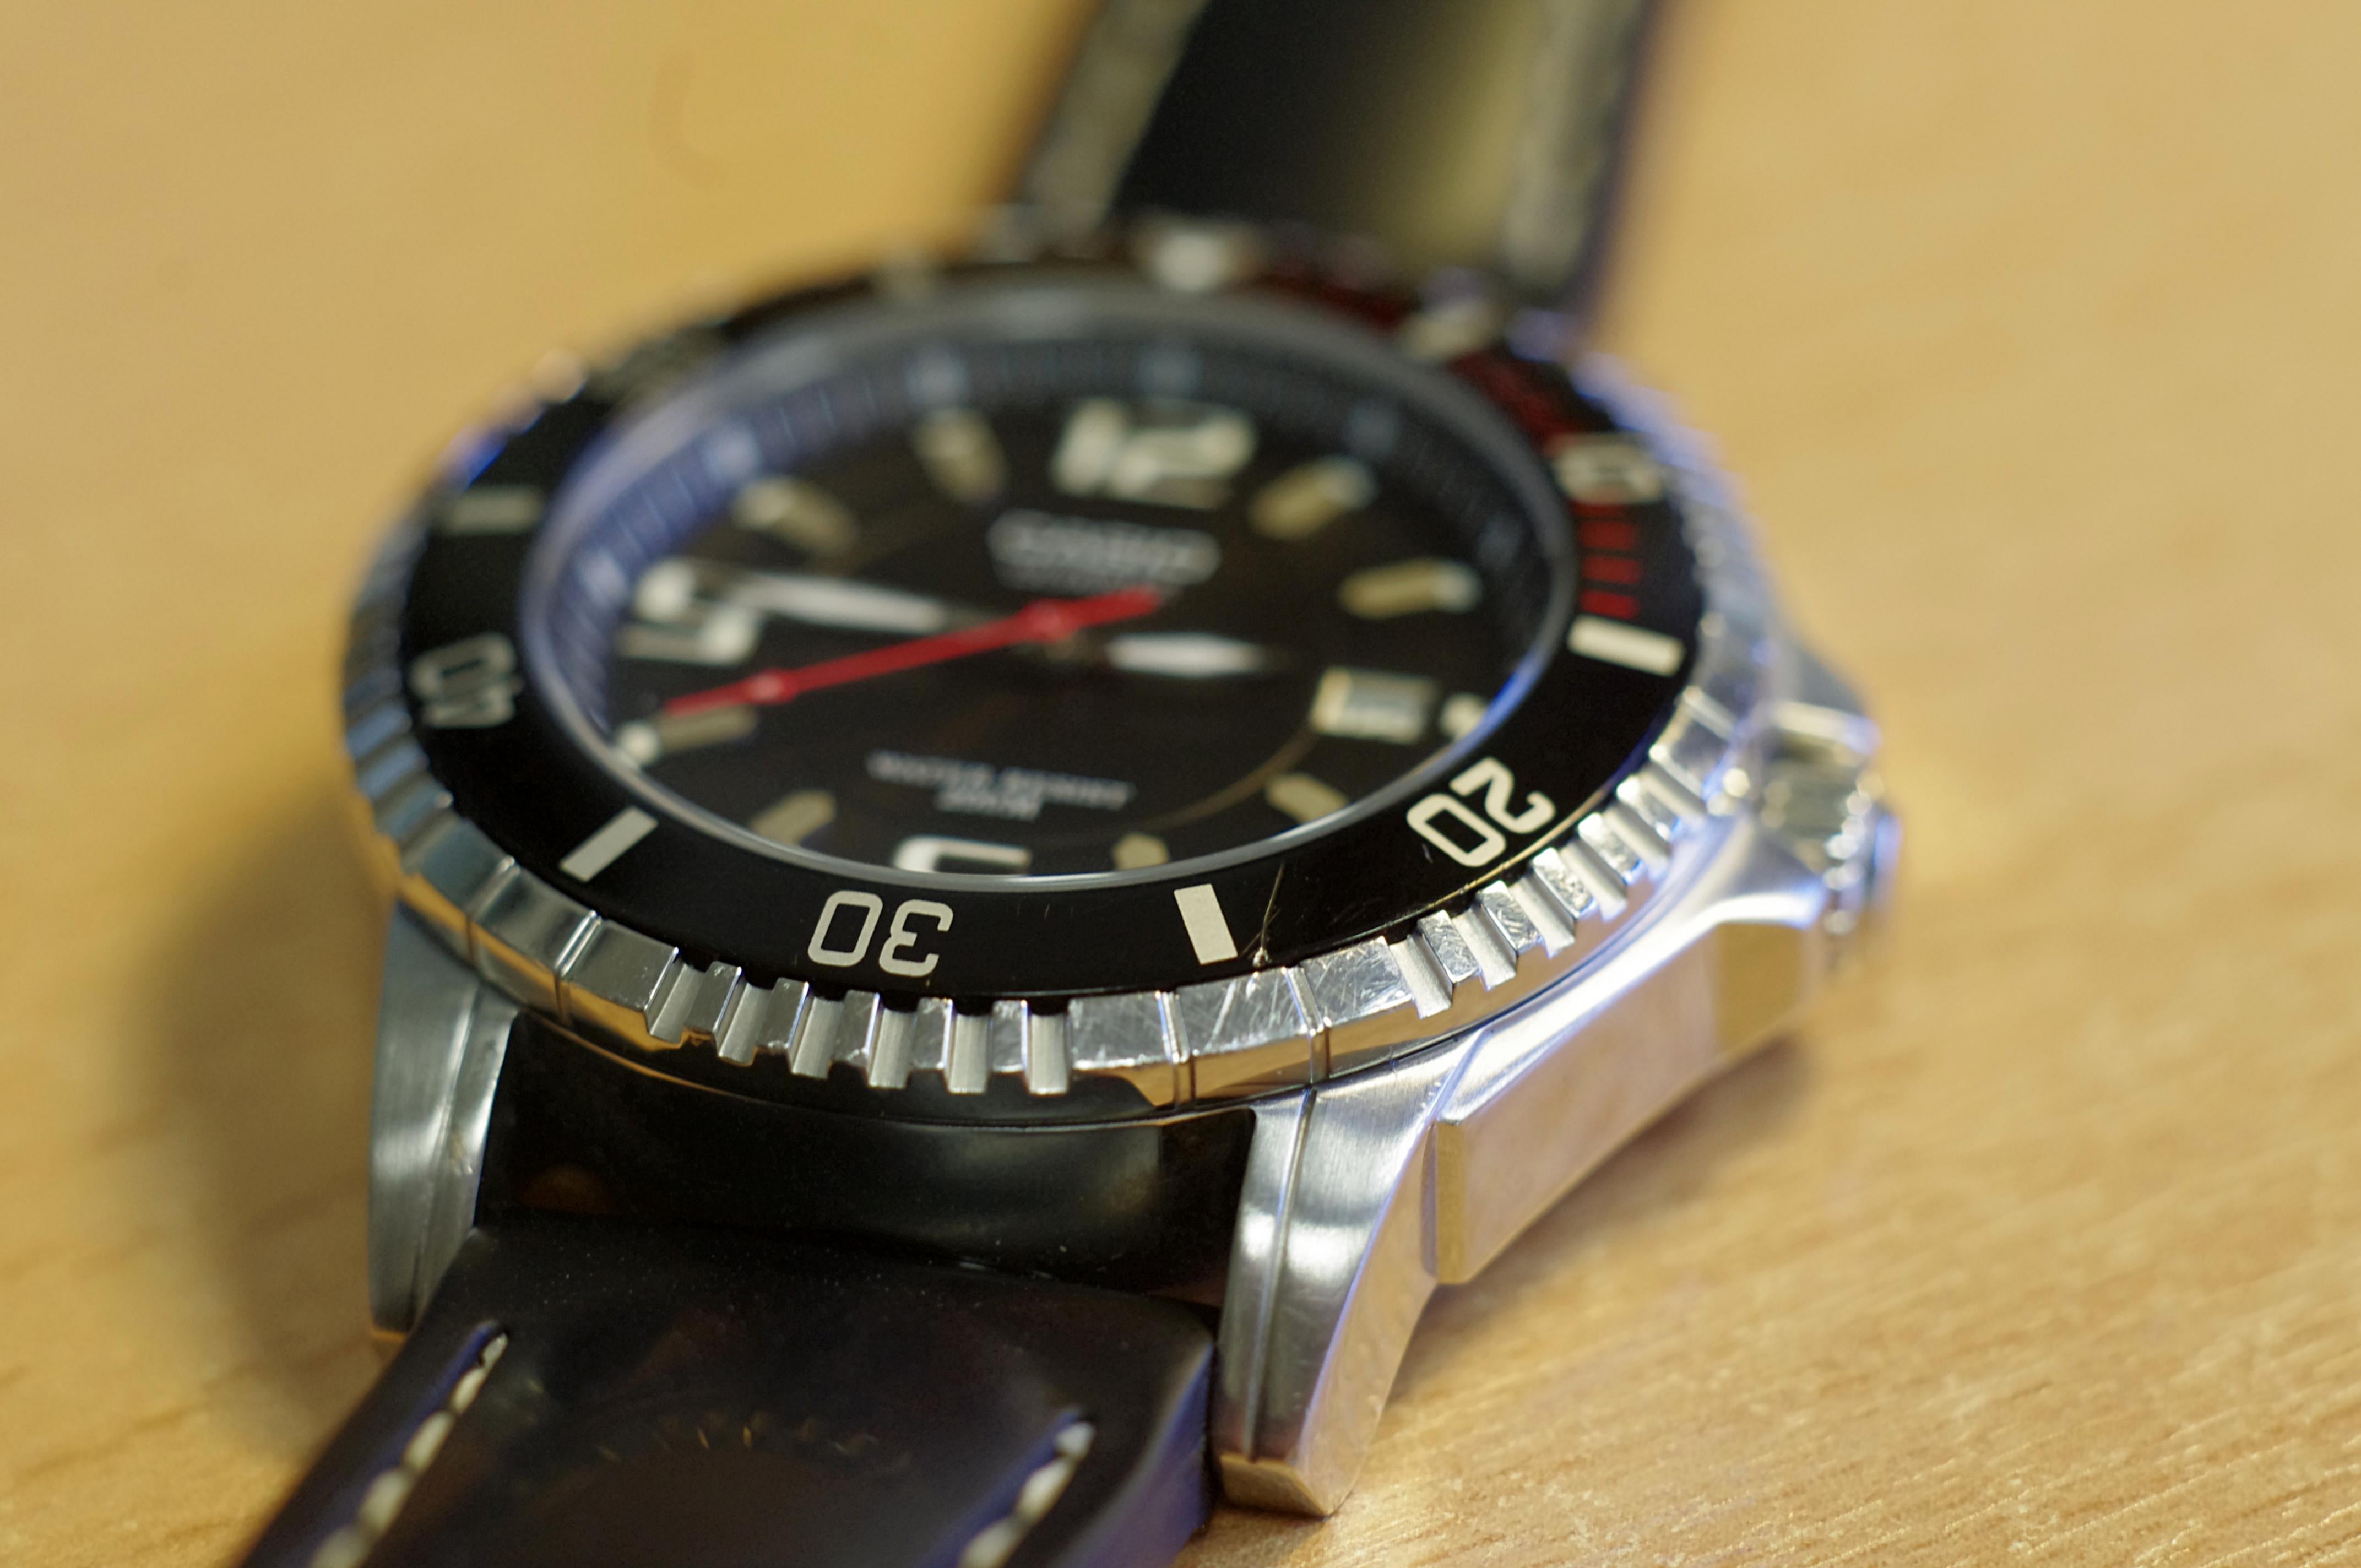 Casio MTD-1053 quartz diver | WatchUSeek Forums Watch